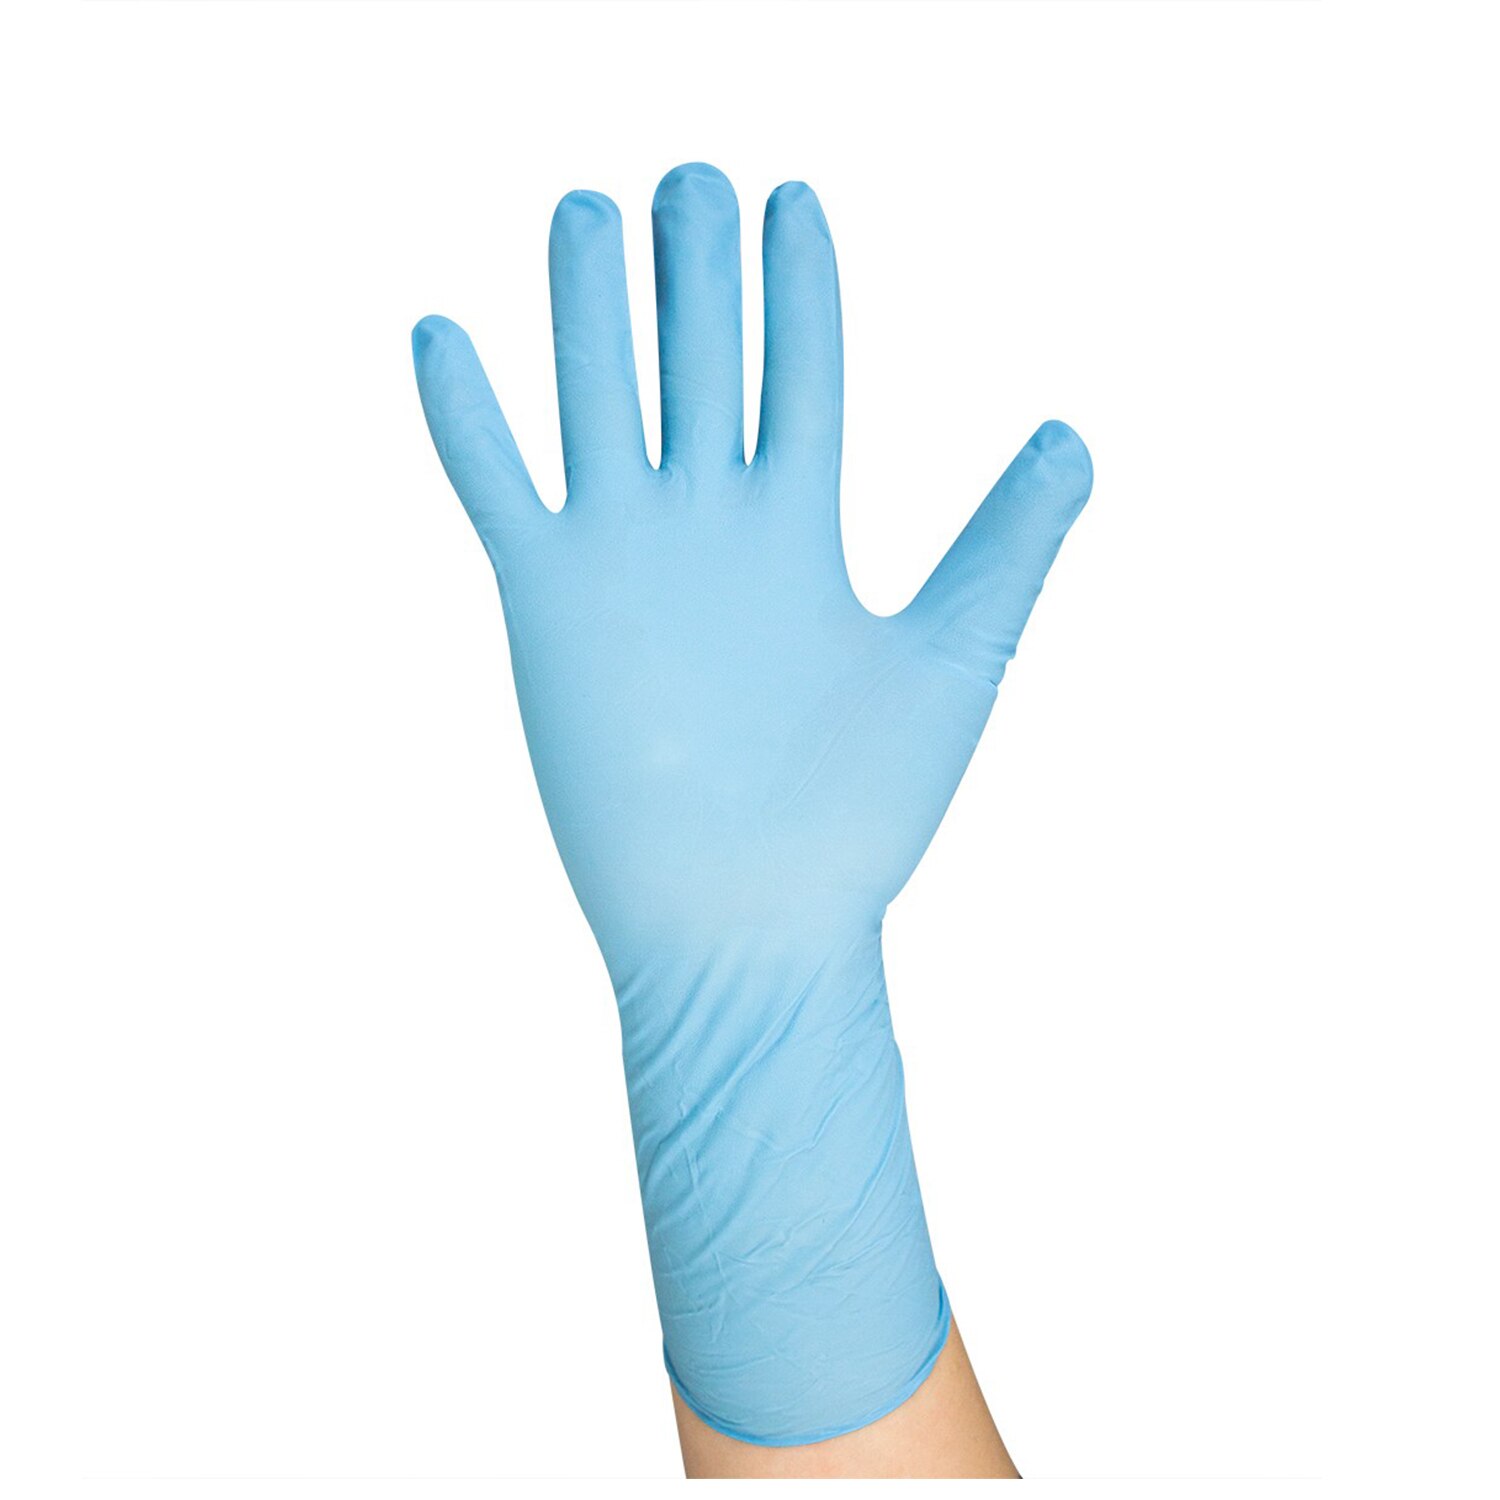 Vinyl protective gloves, Protective gloves for drug testing